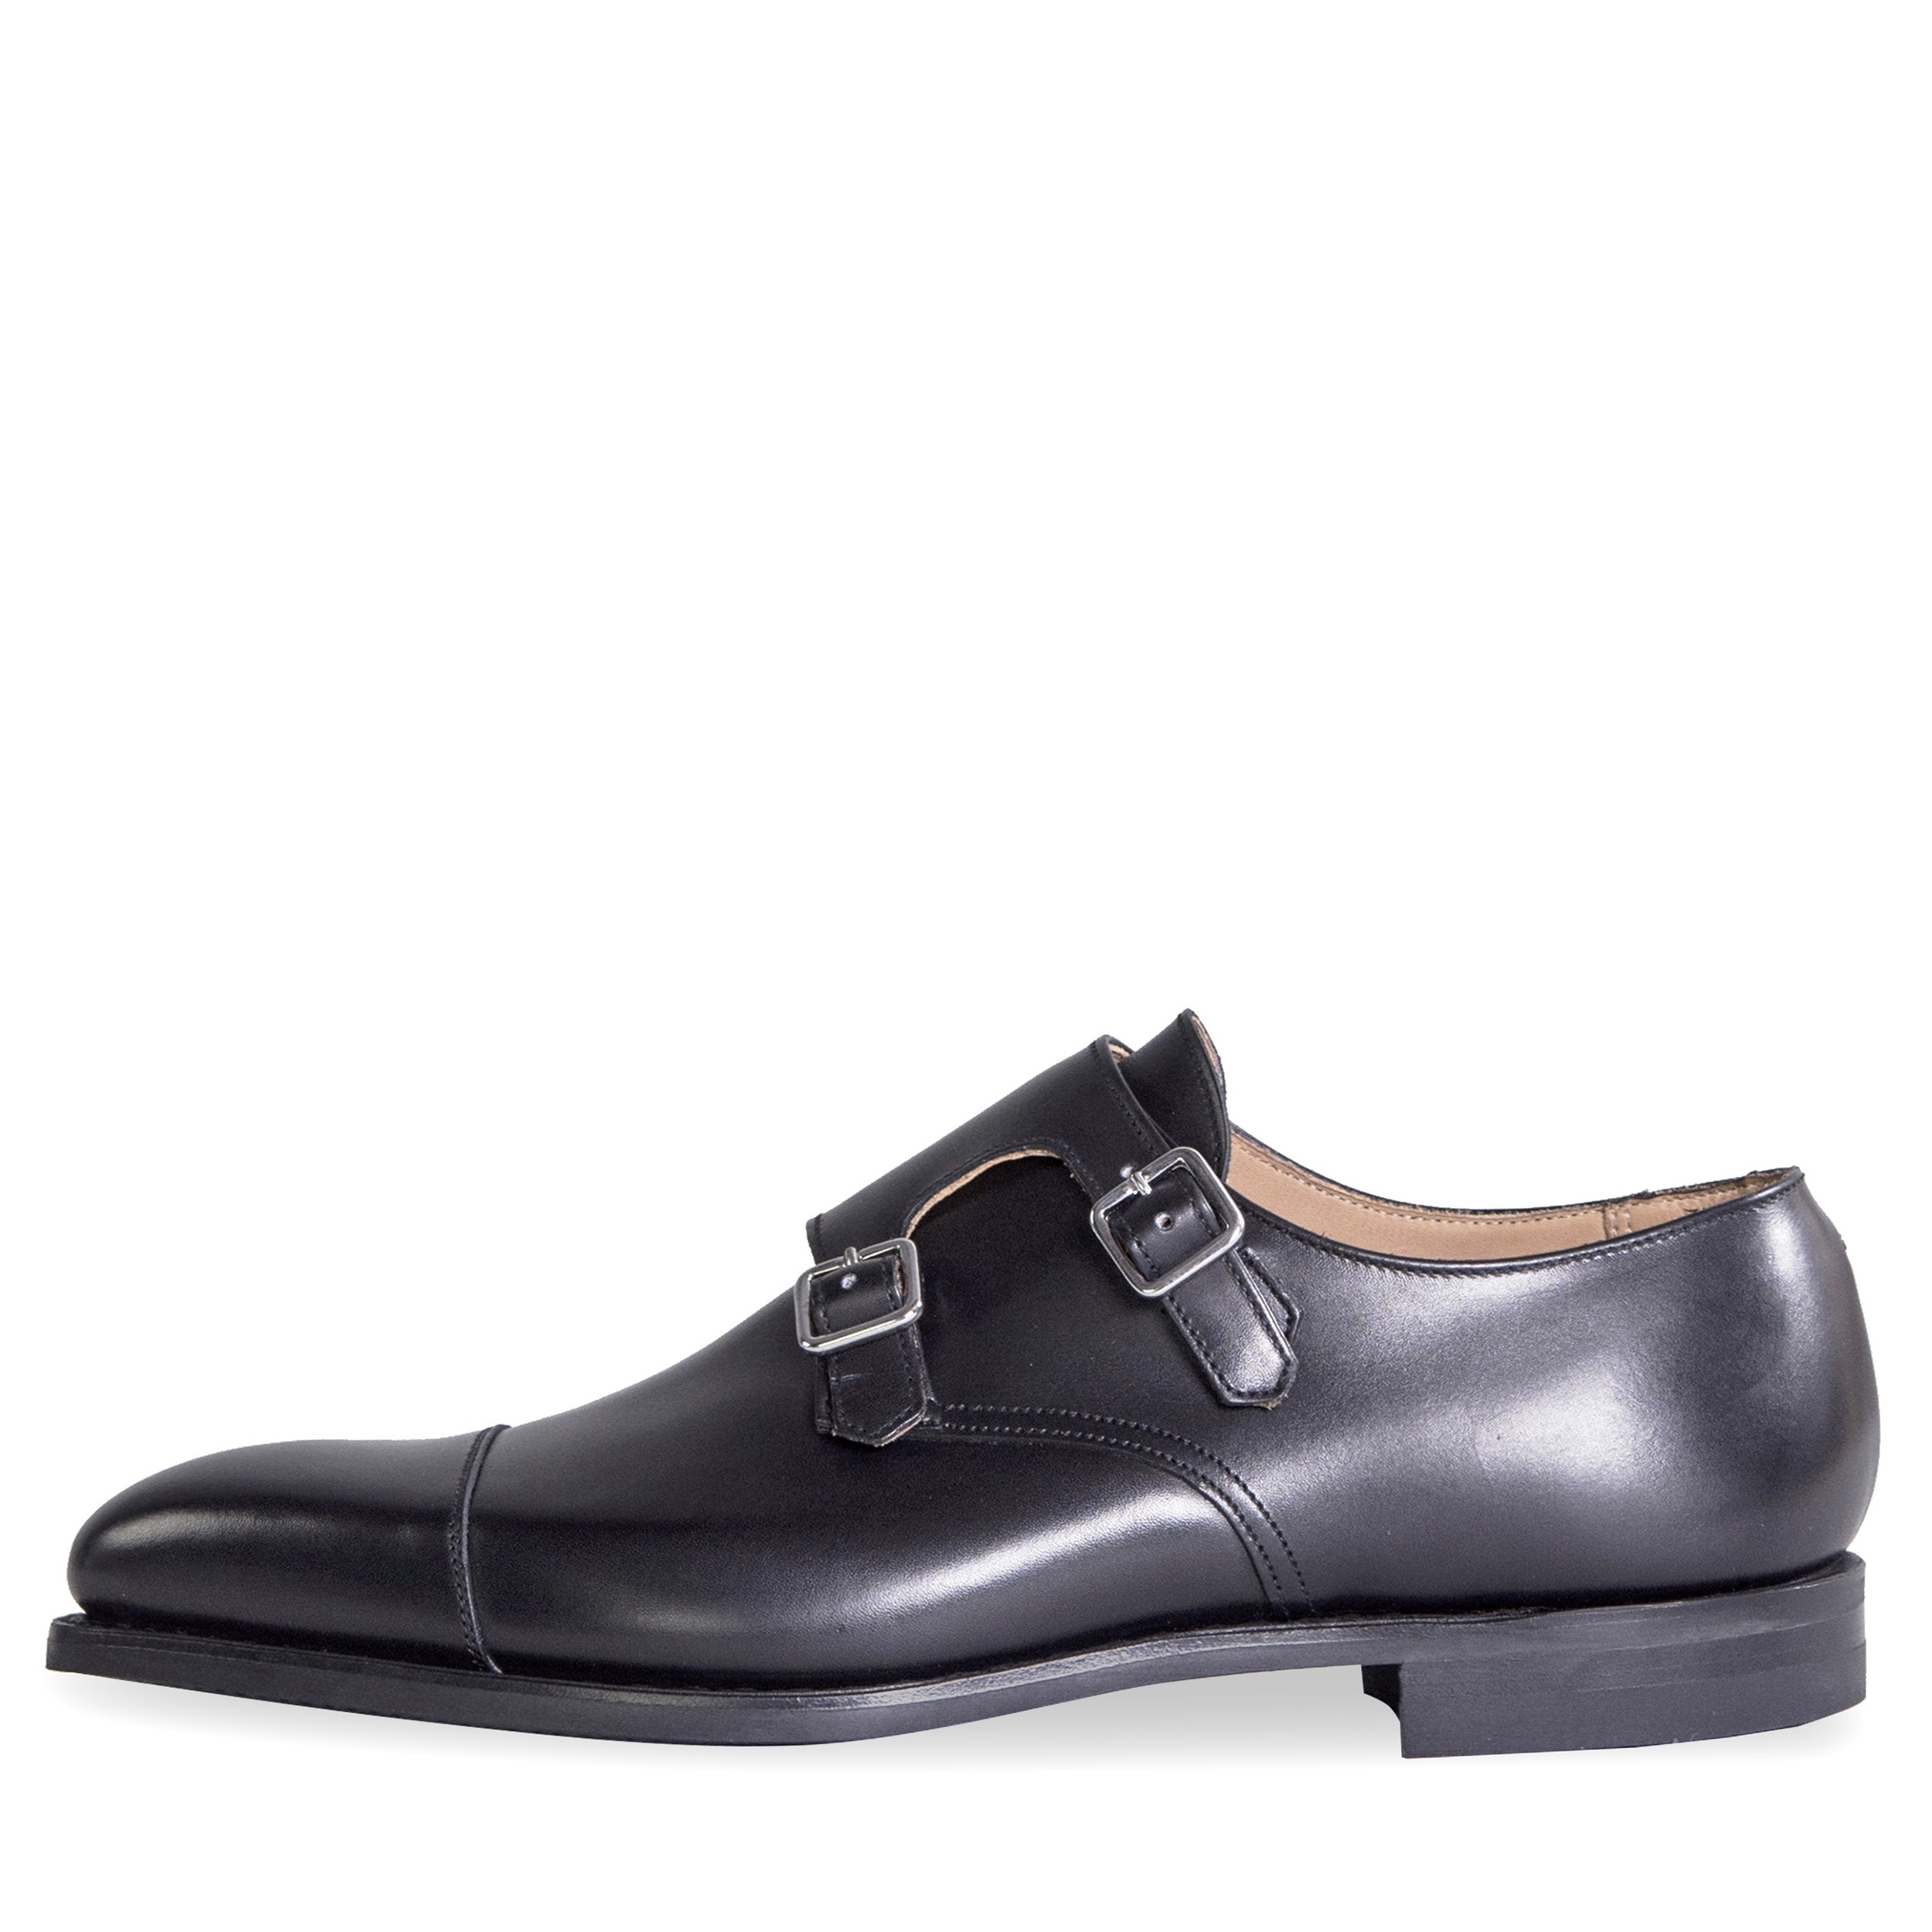 Crockett & Jones ’Lowndes’ Calf Leather Double Monk Shoes With ’City’ Soles Black